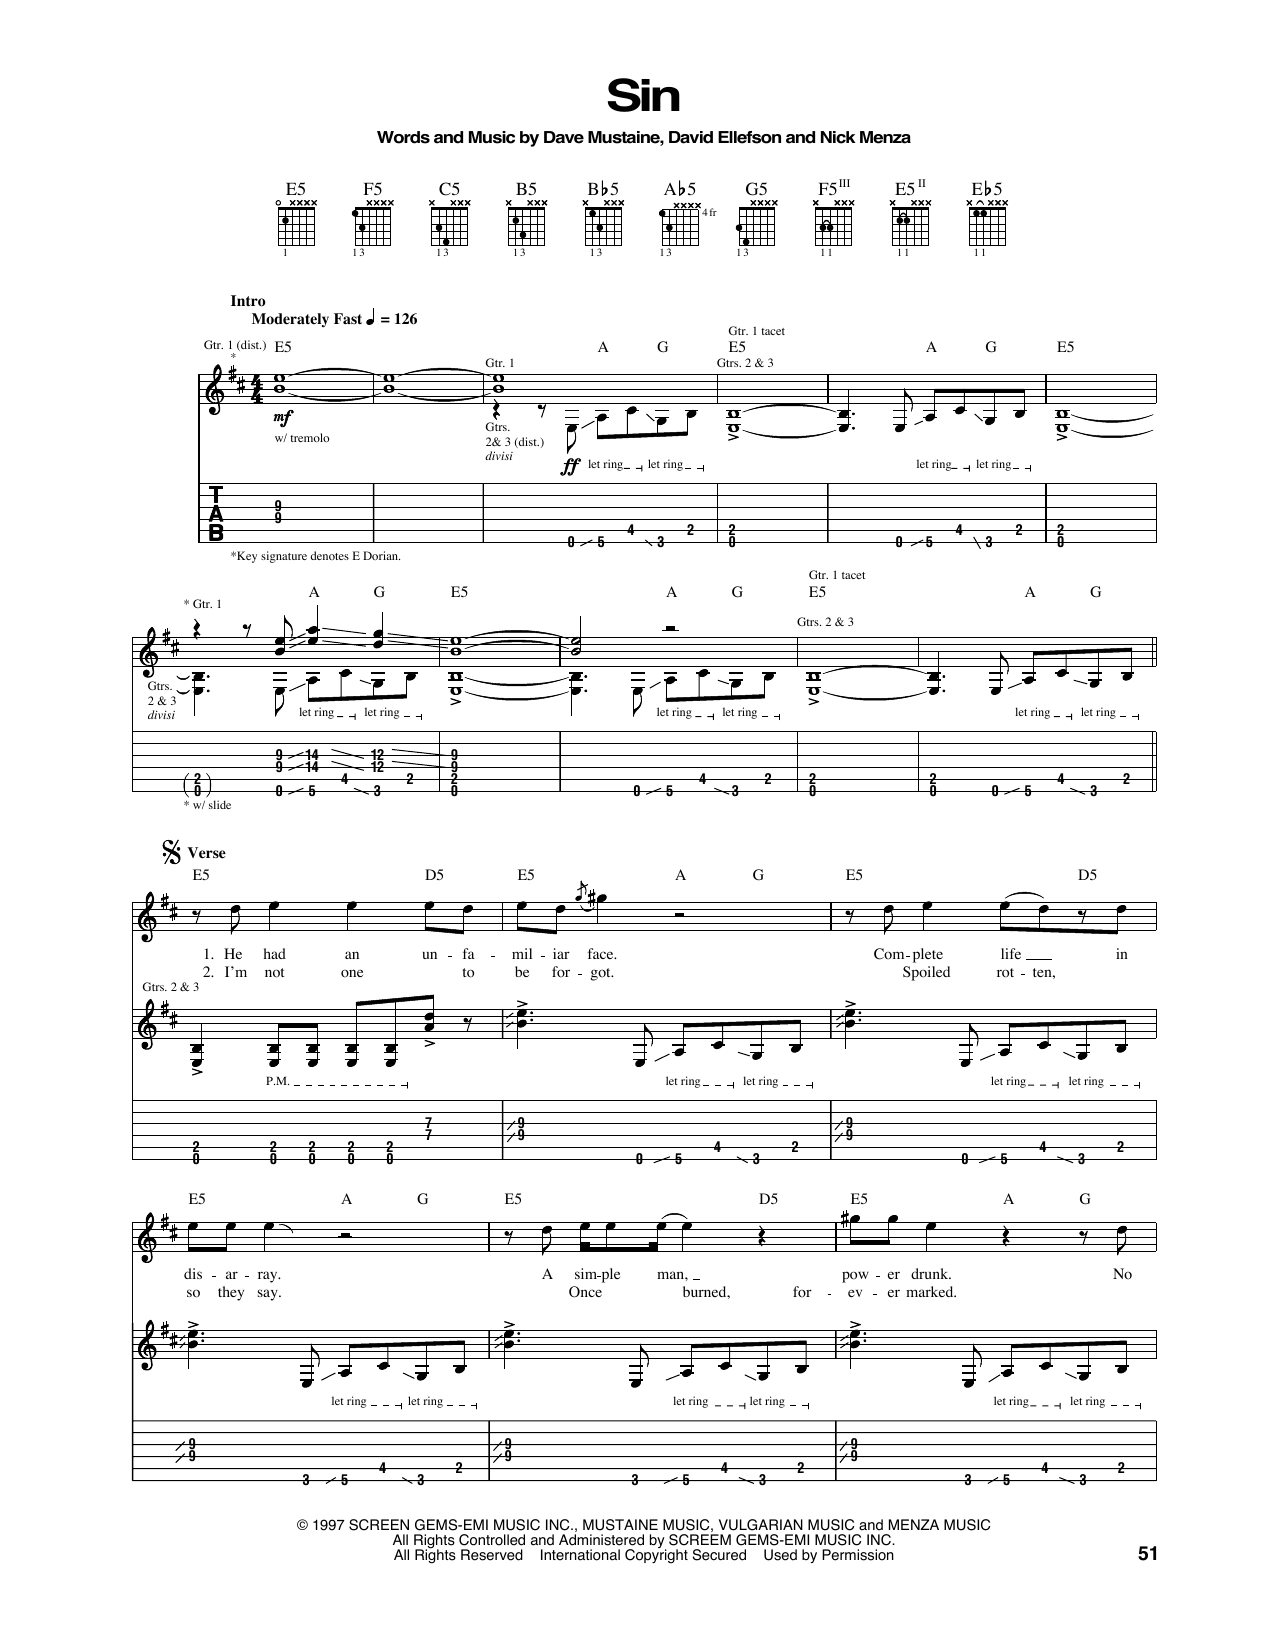 Megadeth Sin Sheet Music Notes & Chords for Guitar Tab - Download or Print PDF